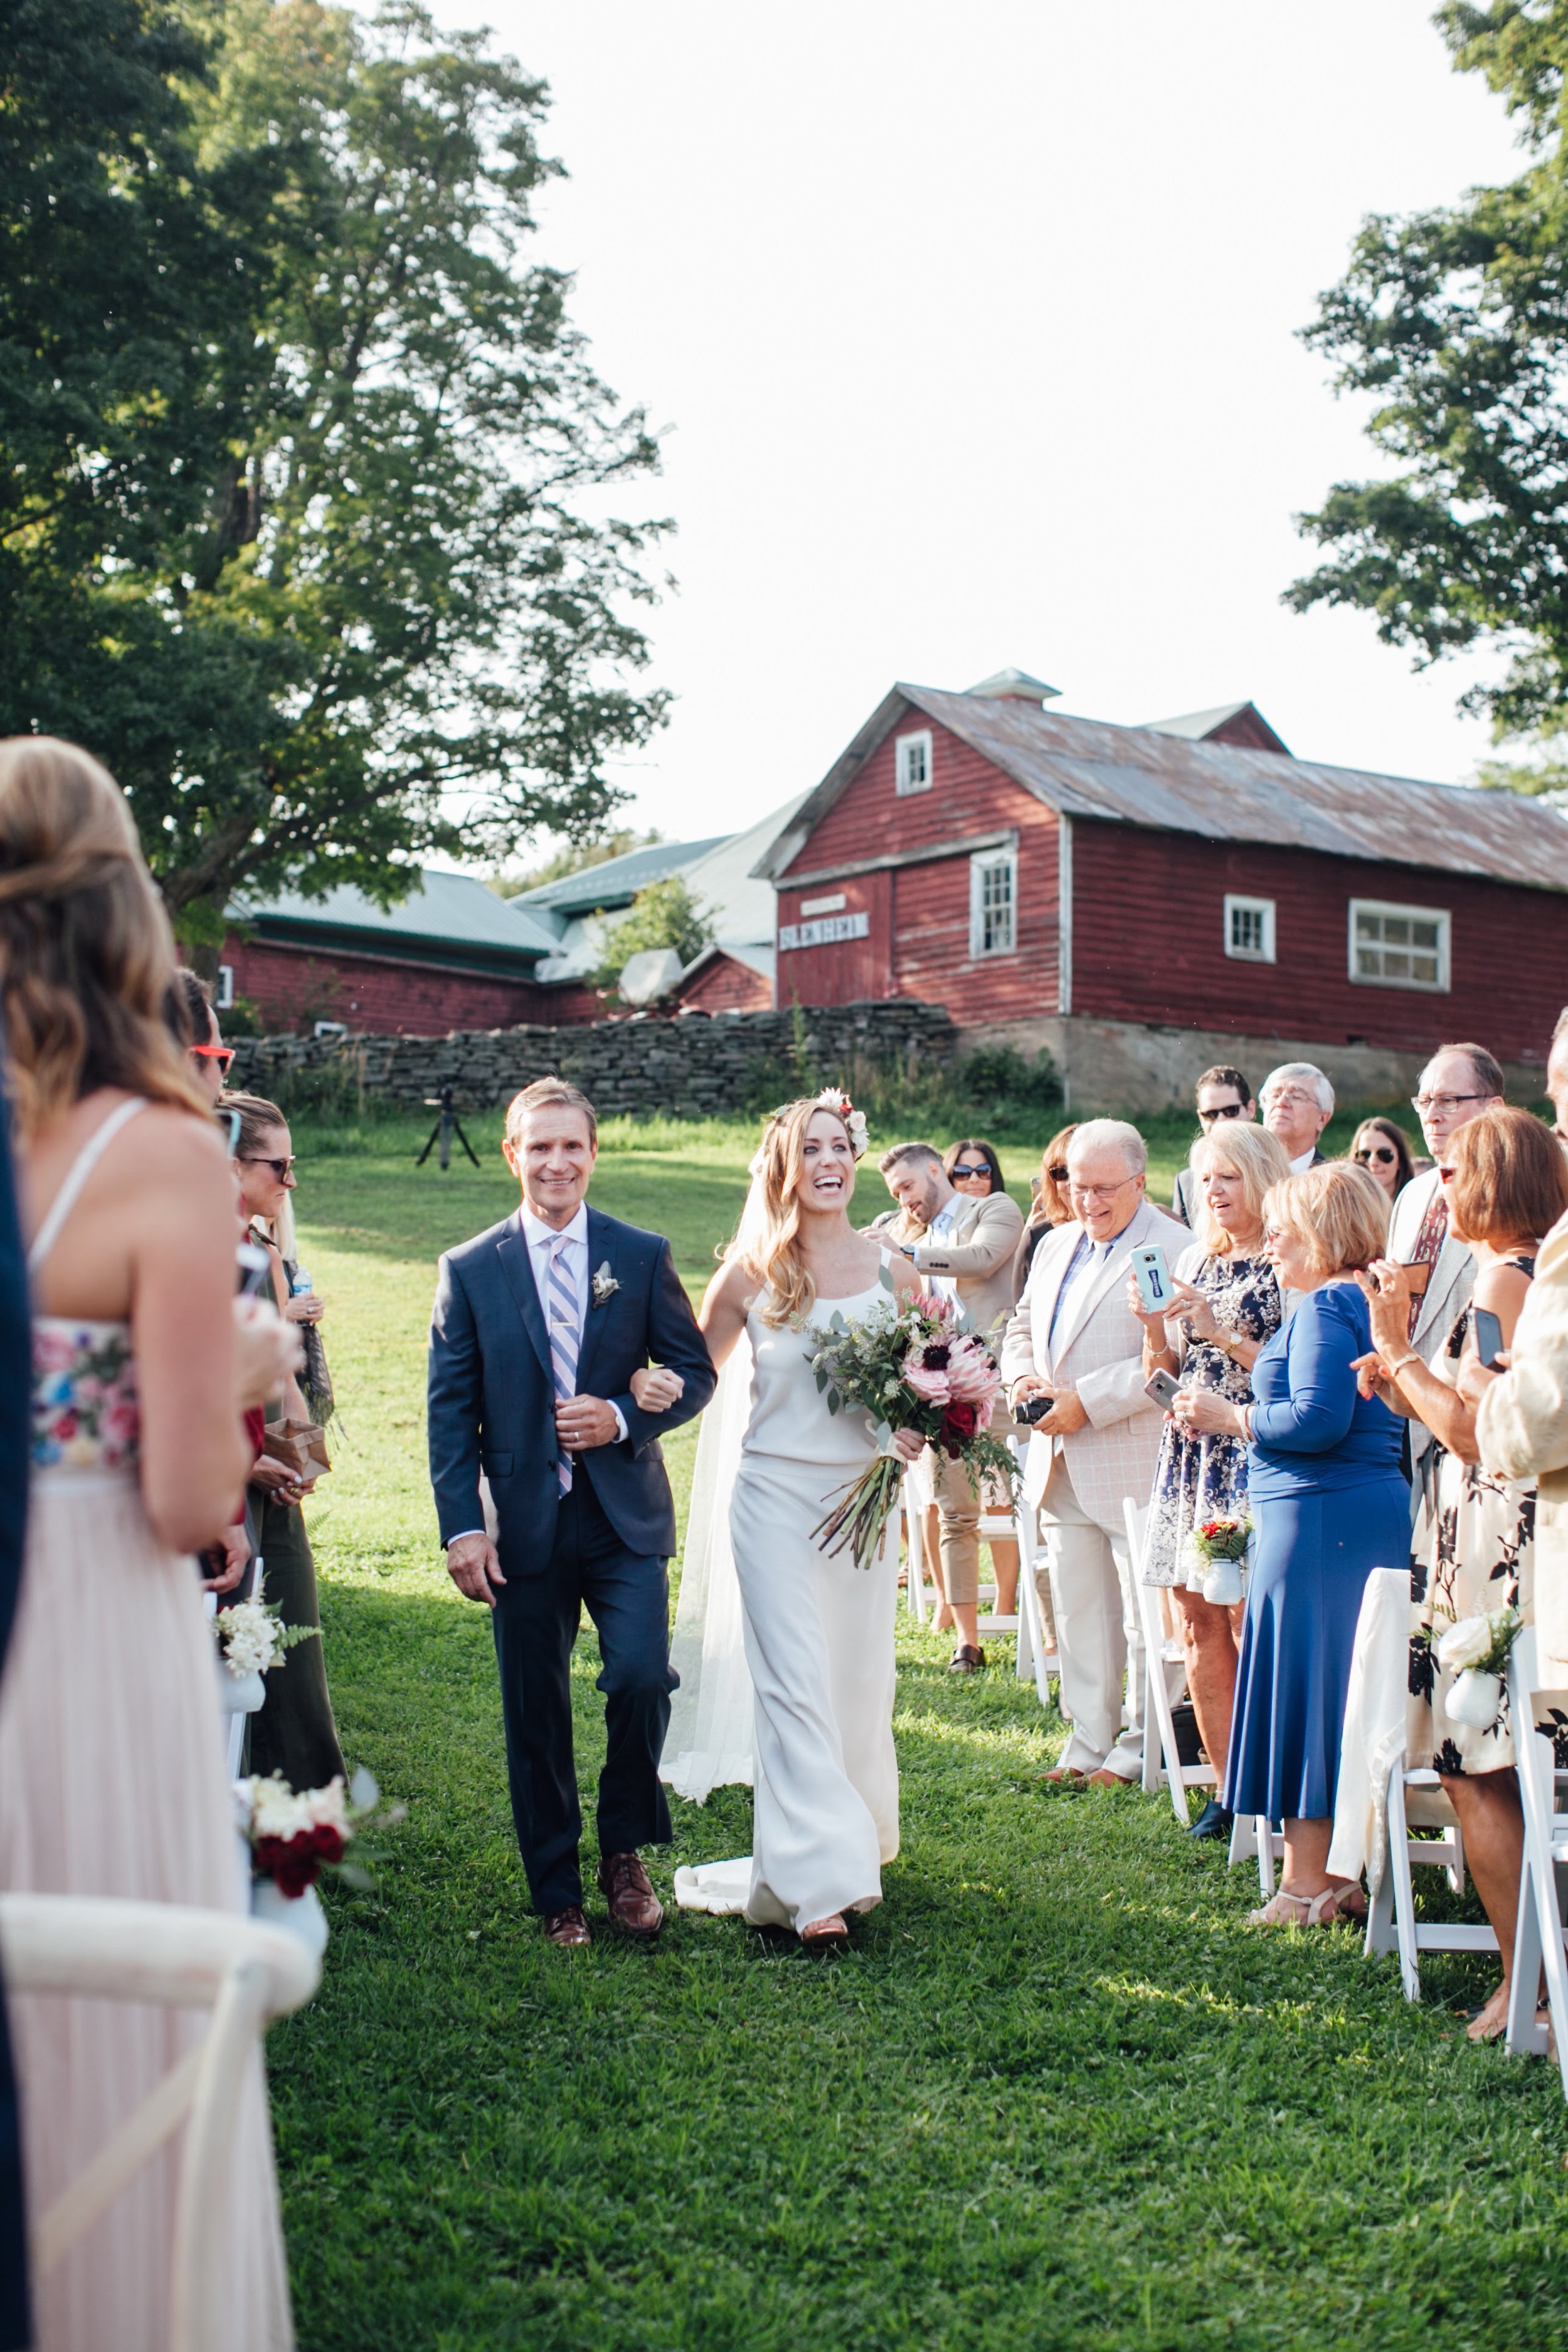 Courtney + Matt Blenheim Hill Farm Catskills NY Wedding Veronica Lola Photography 2017-374.jpg